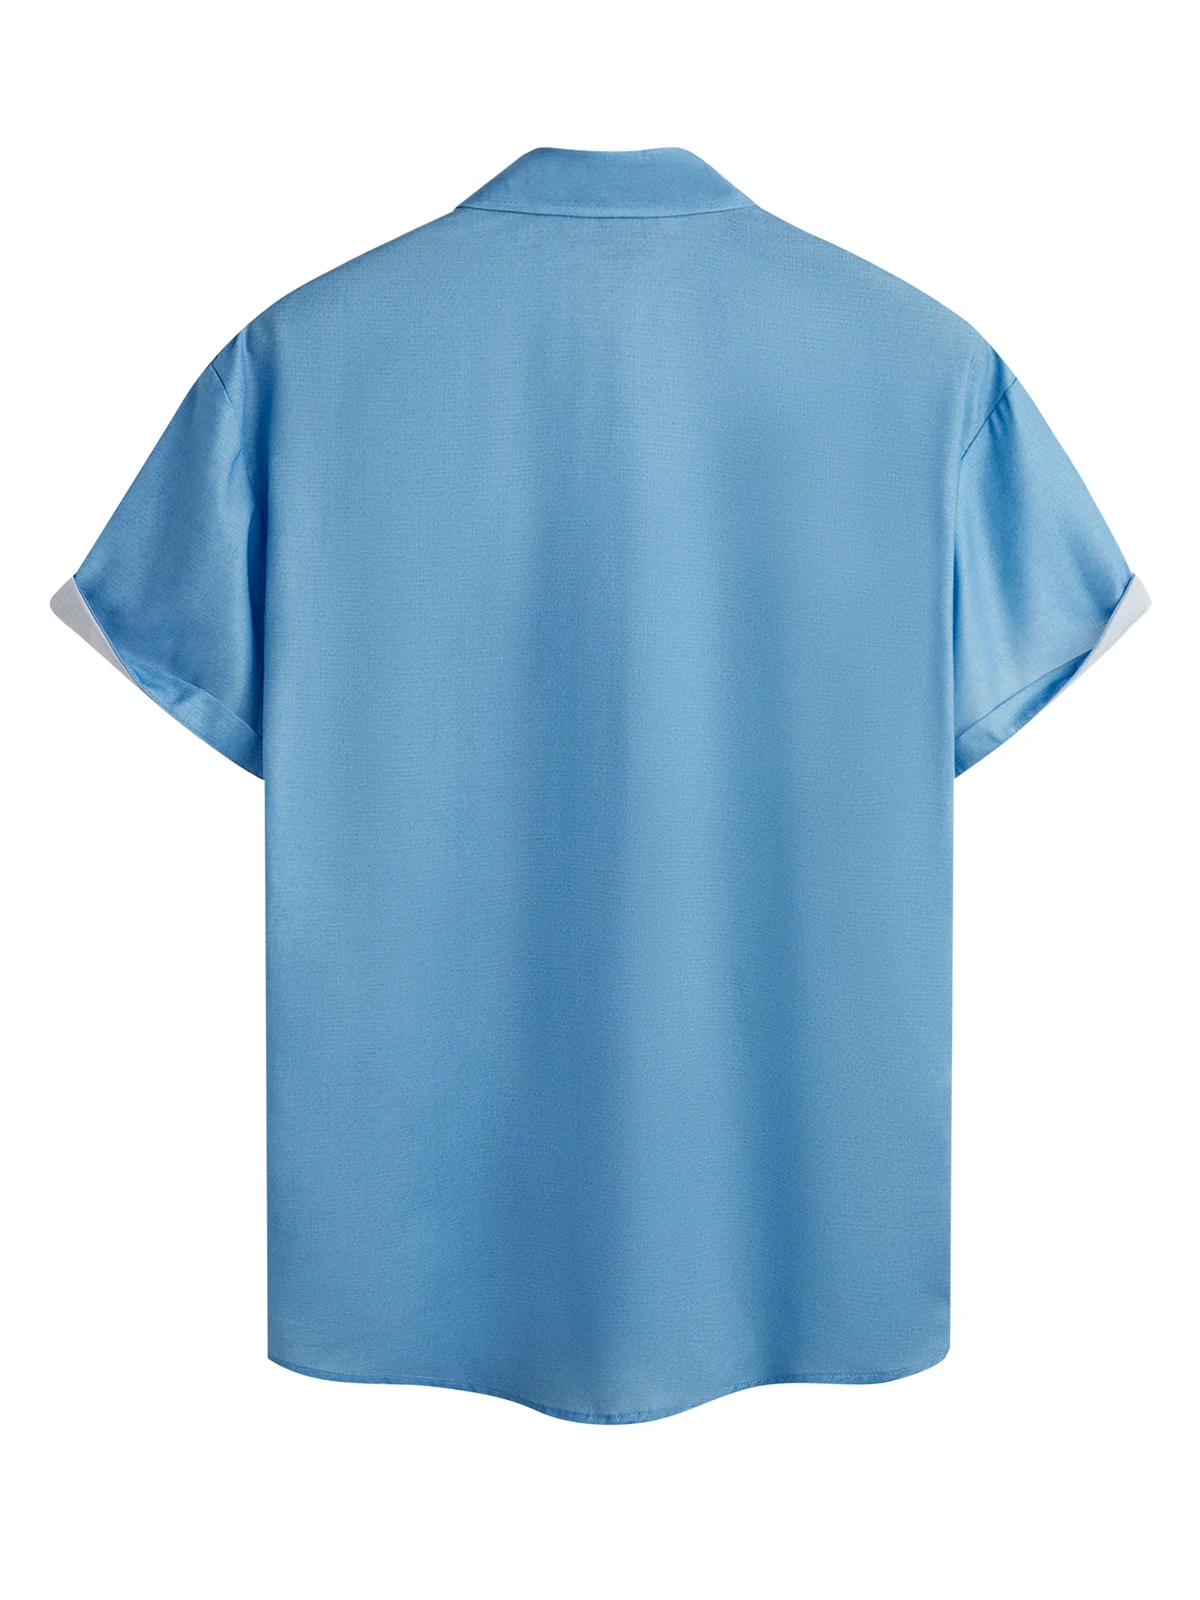 Hardaddy Stripe Chest Pocket Short Sleeve Casual Bowling Shirt